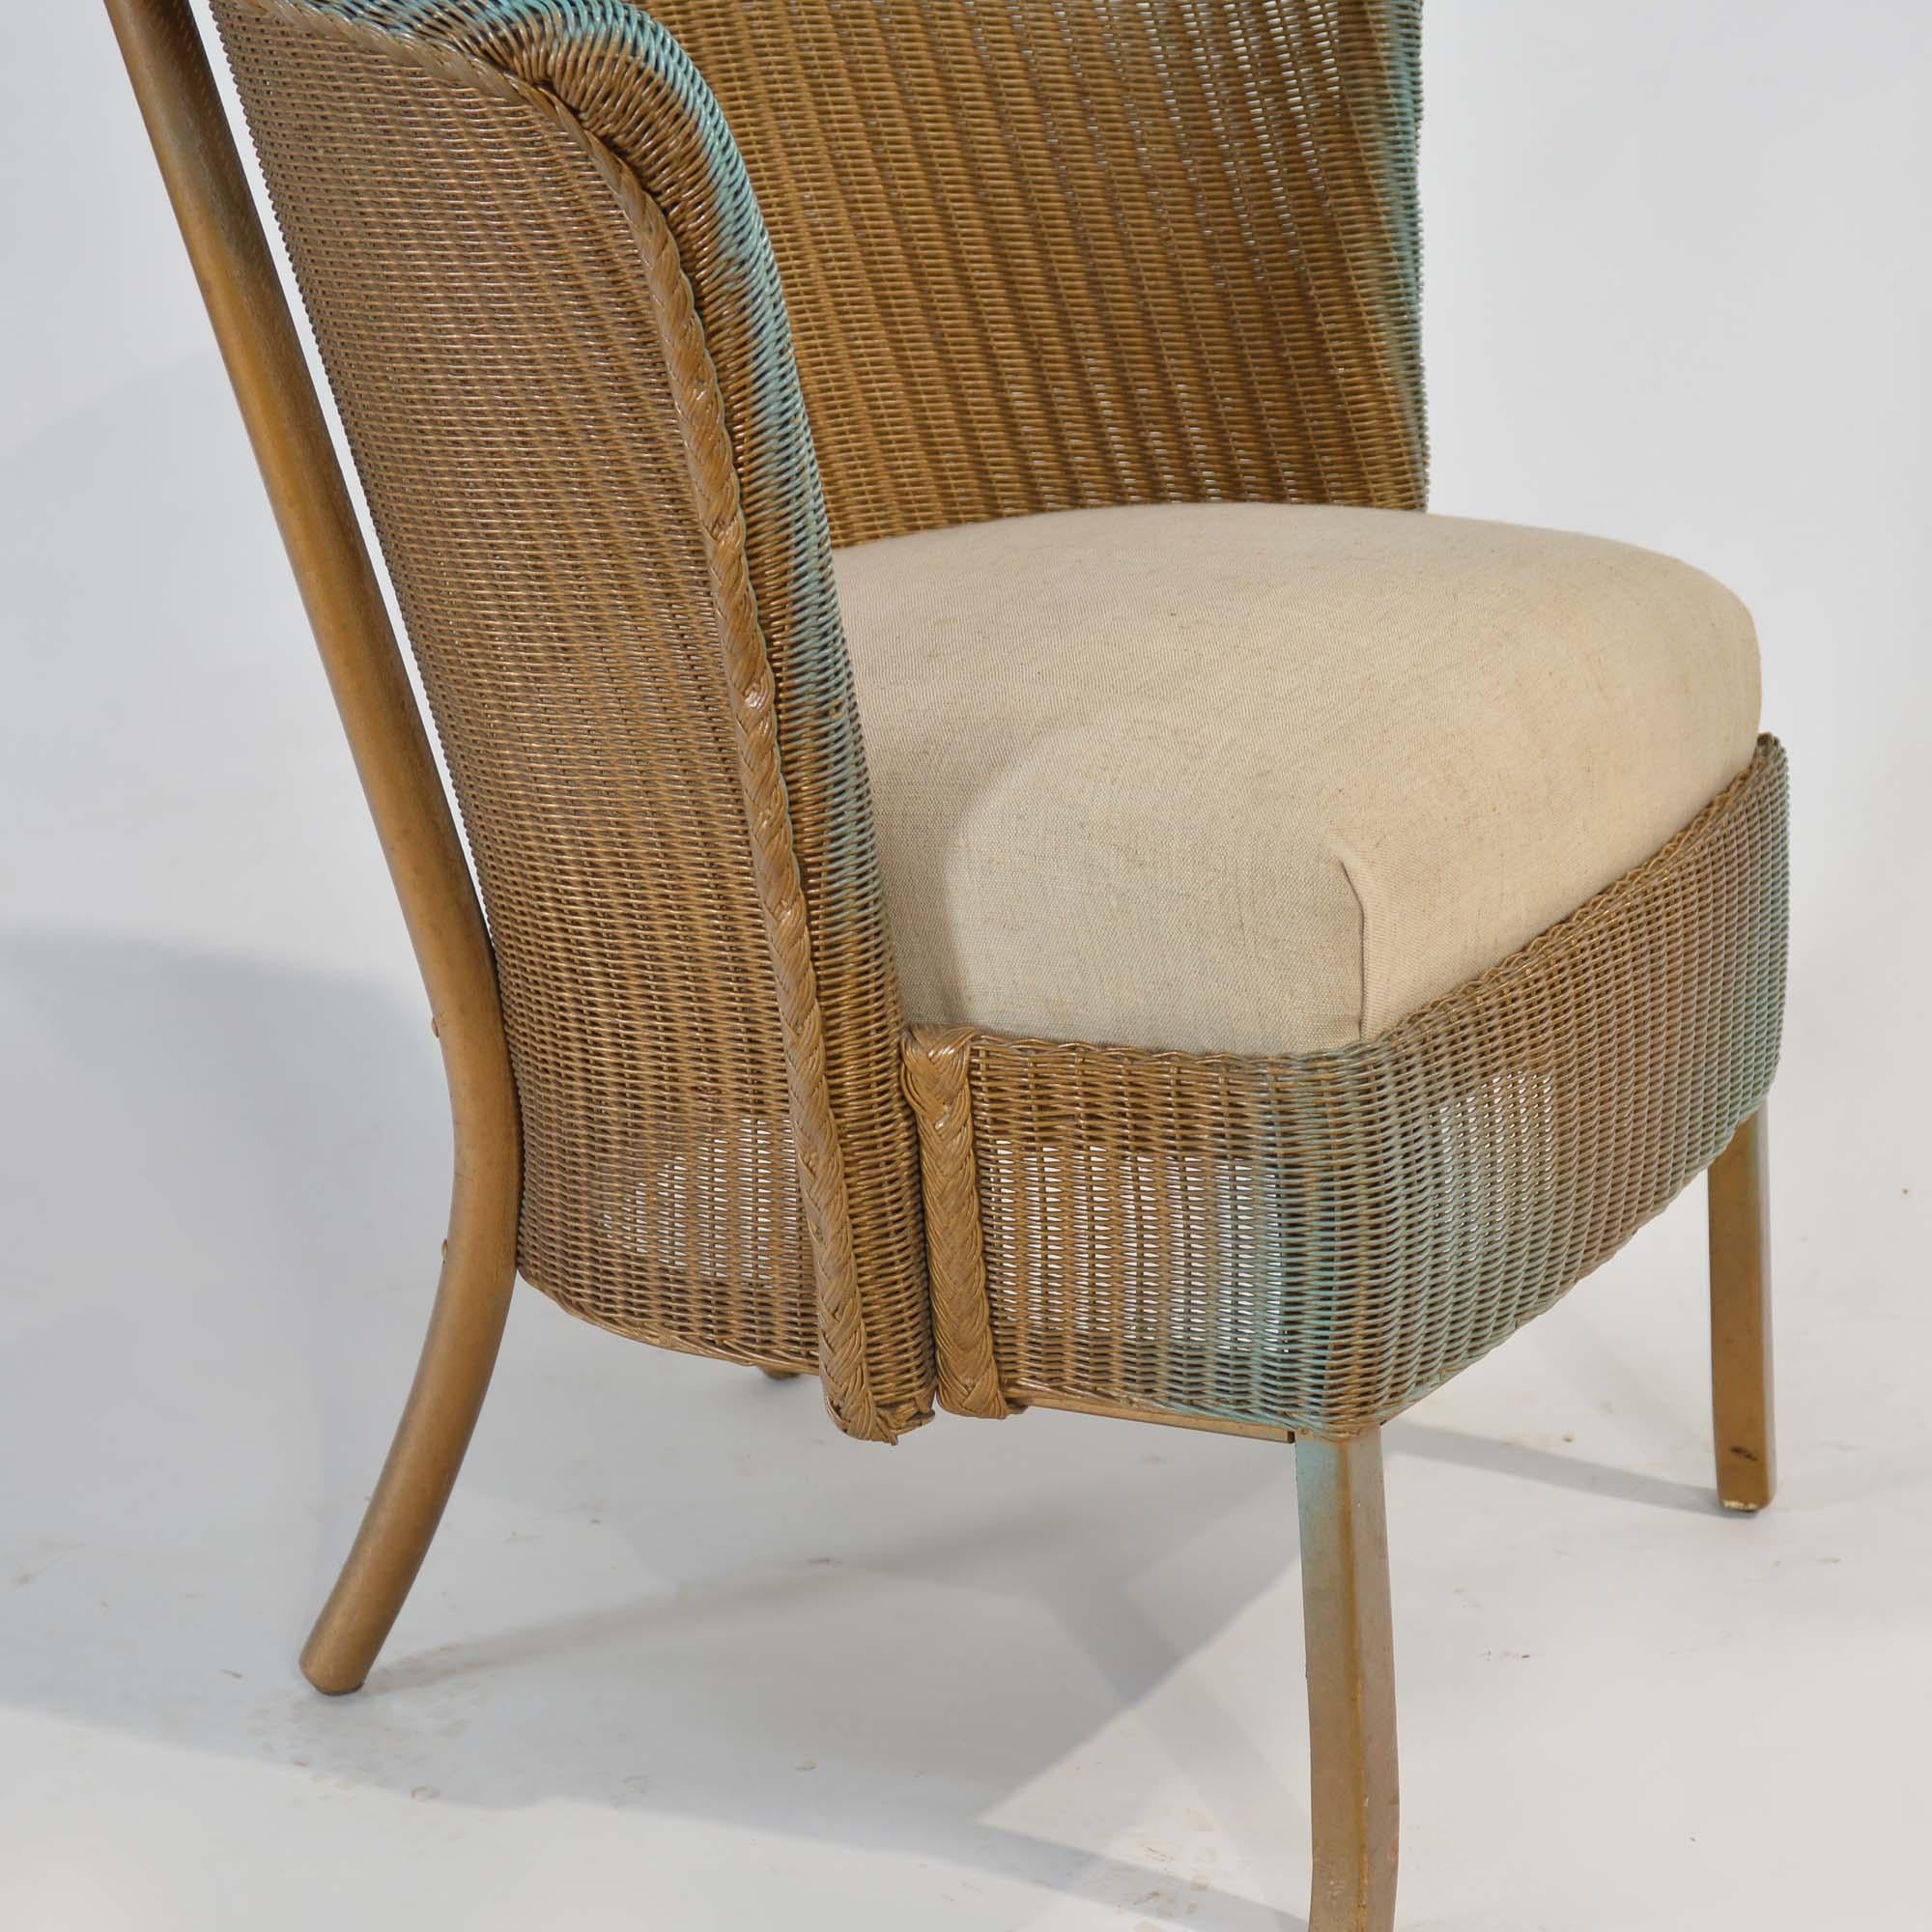 Lloyd Loom Lusty chair In Good Condition For Sale In Castle Douglas, GB